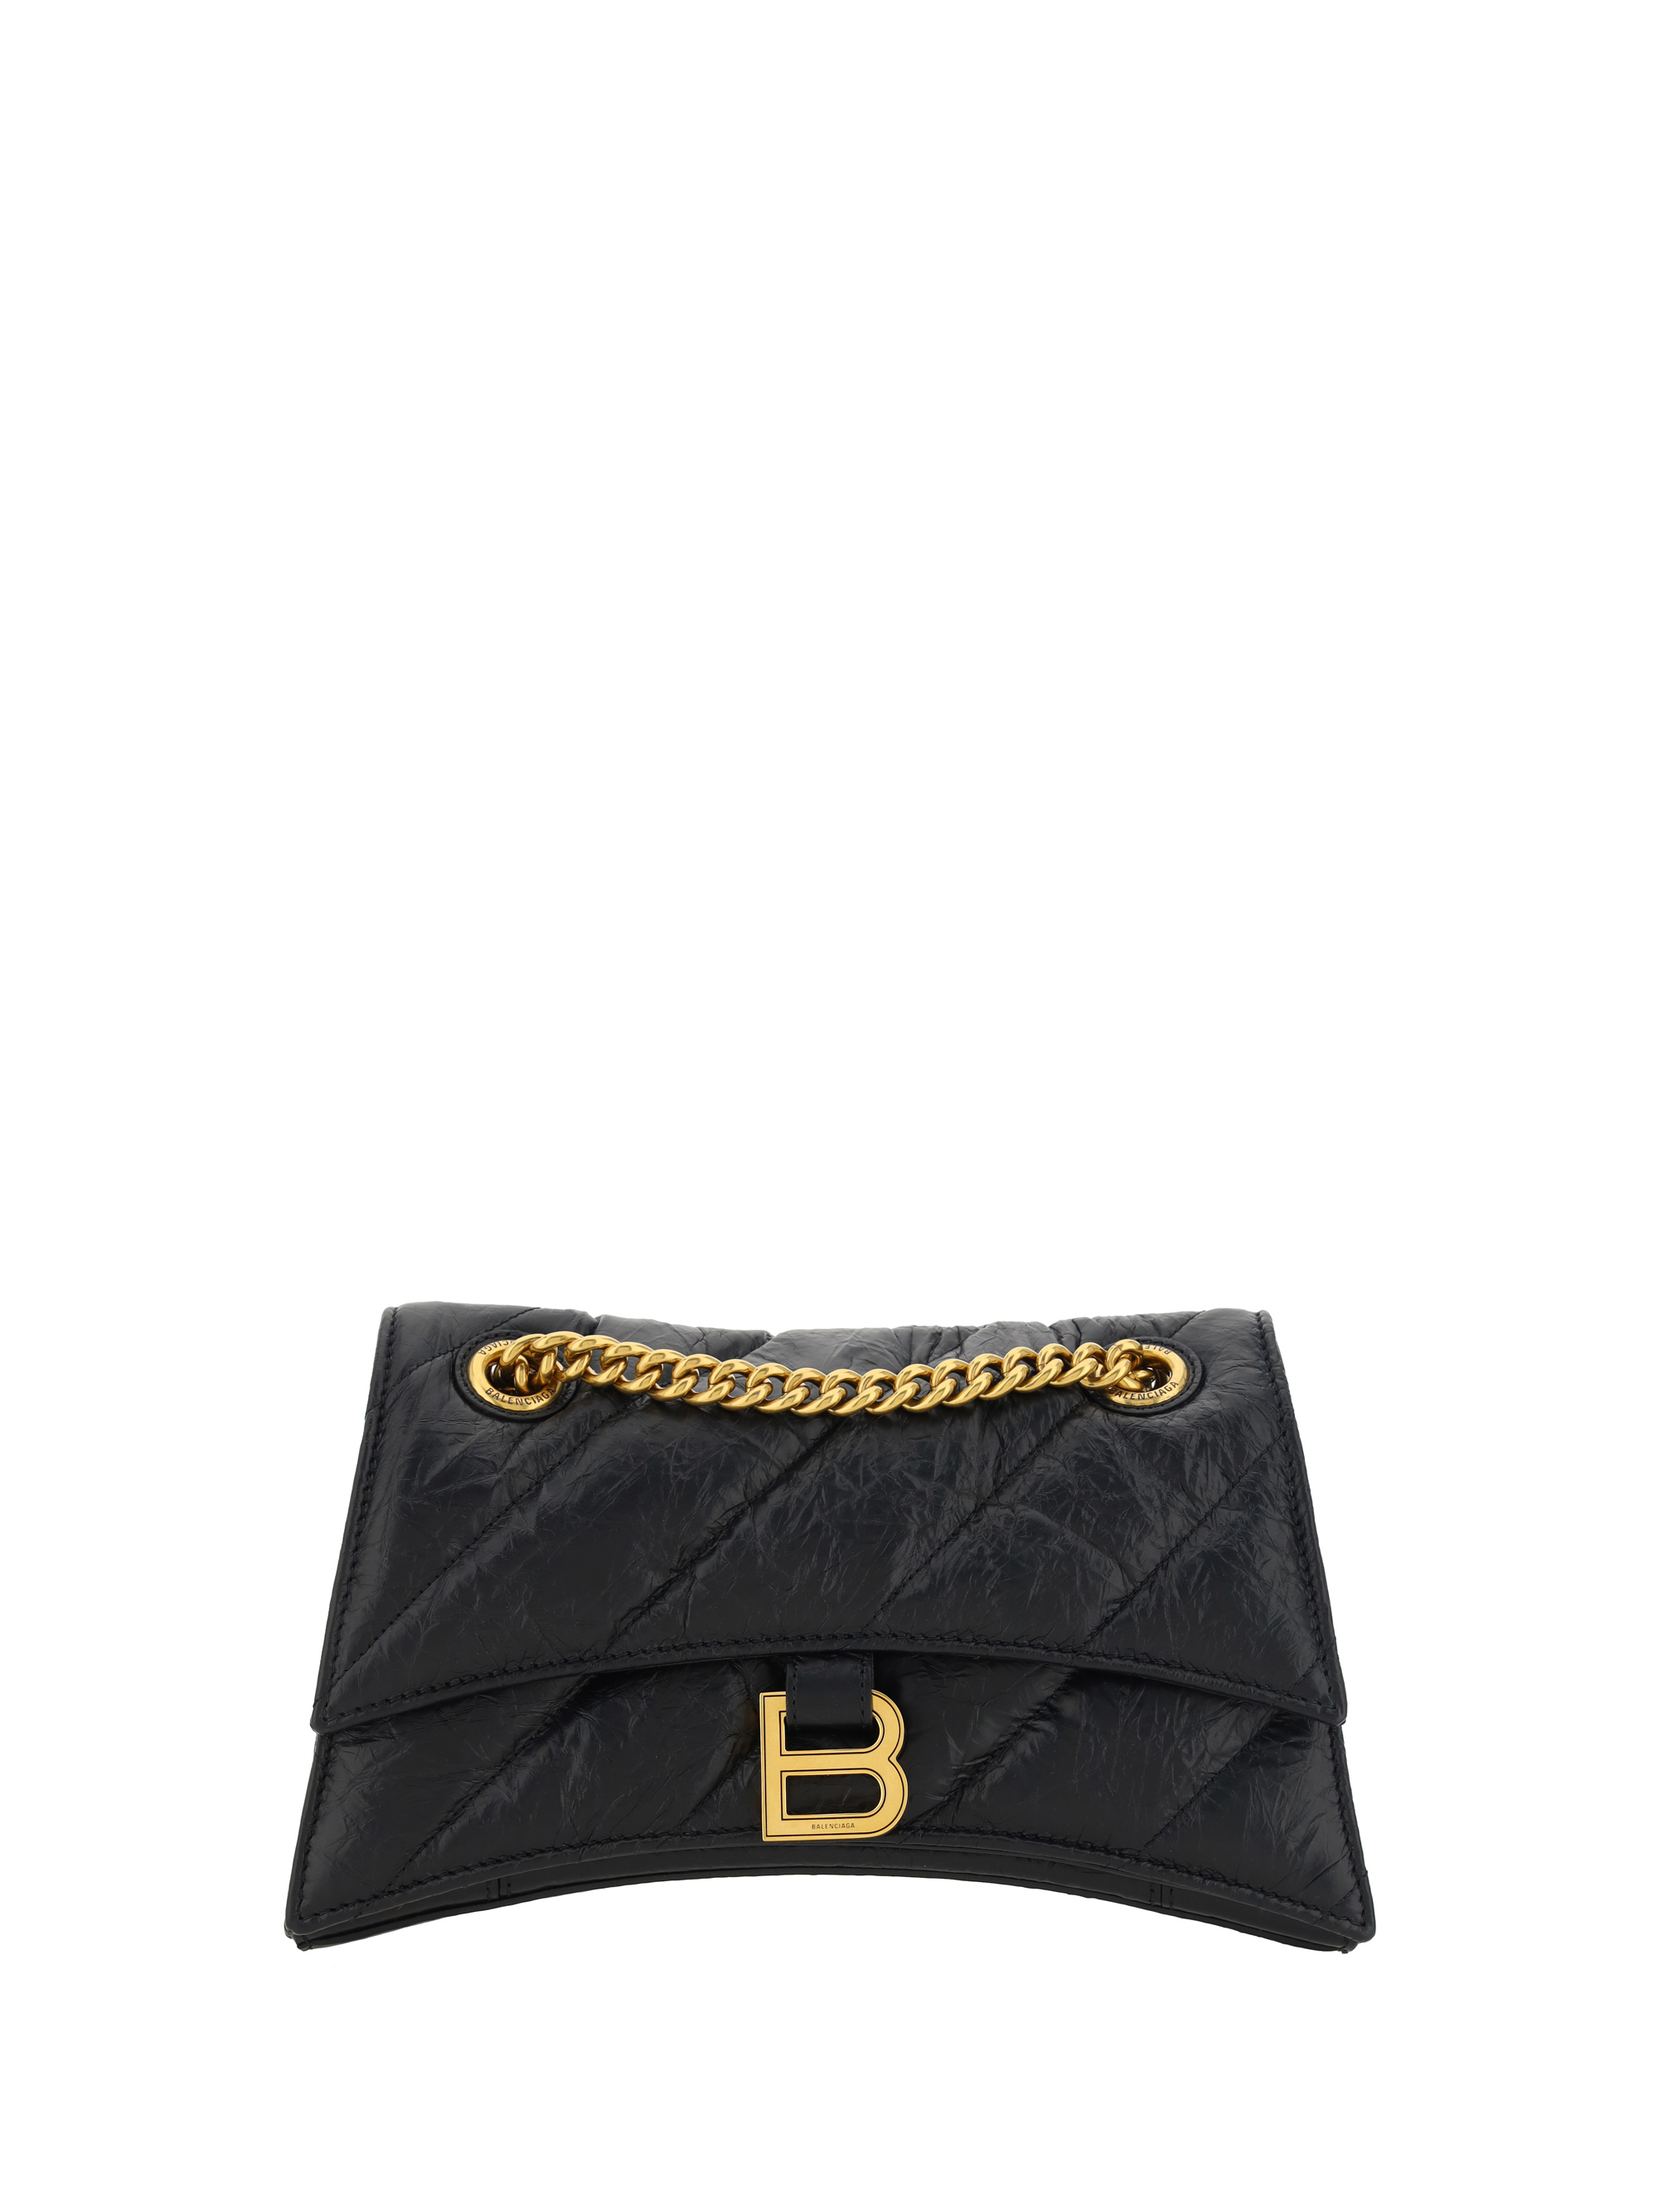 Balenciaga Hourglass Small Shoulder Bag In Black